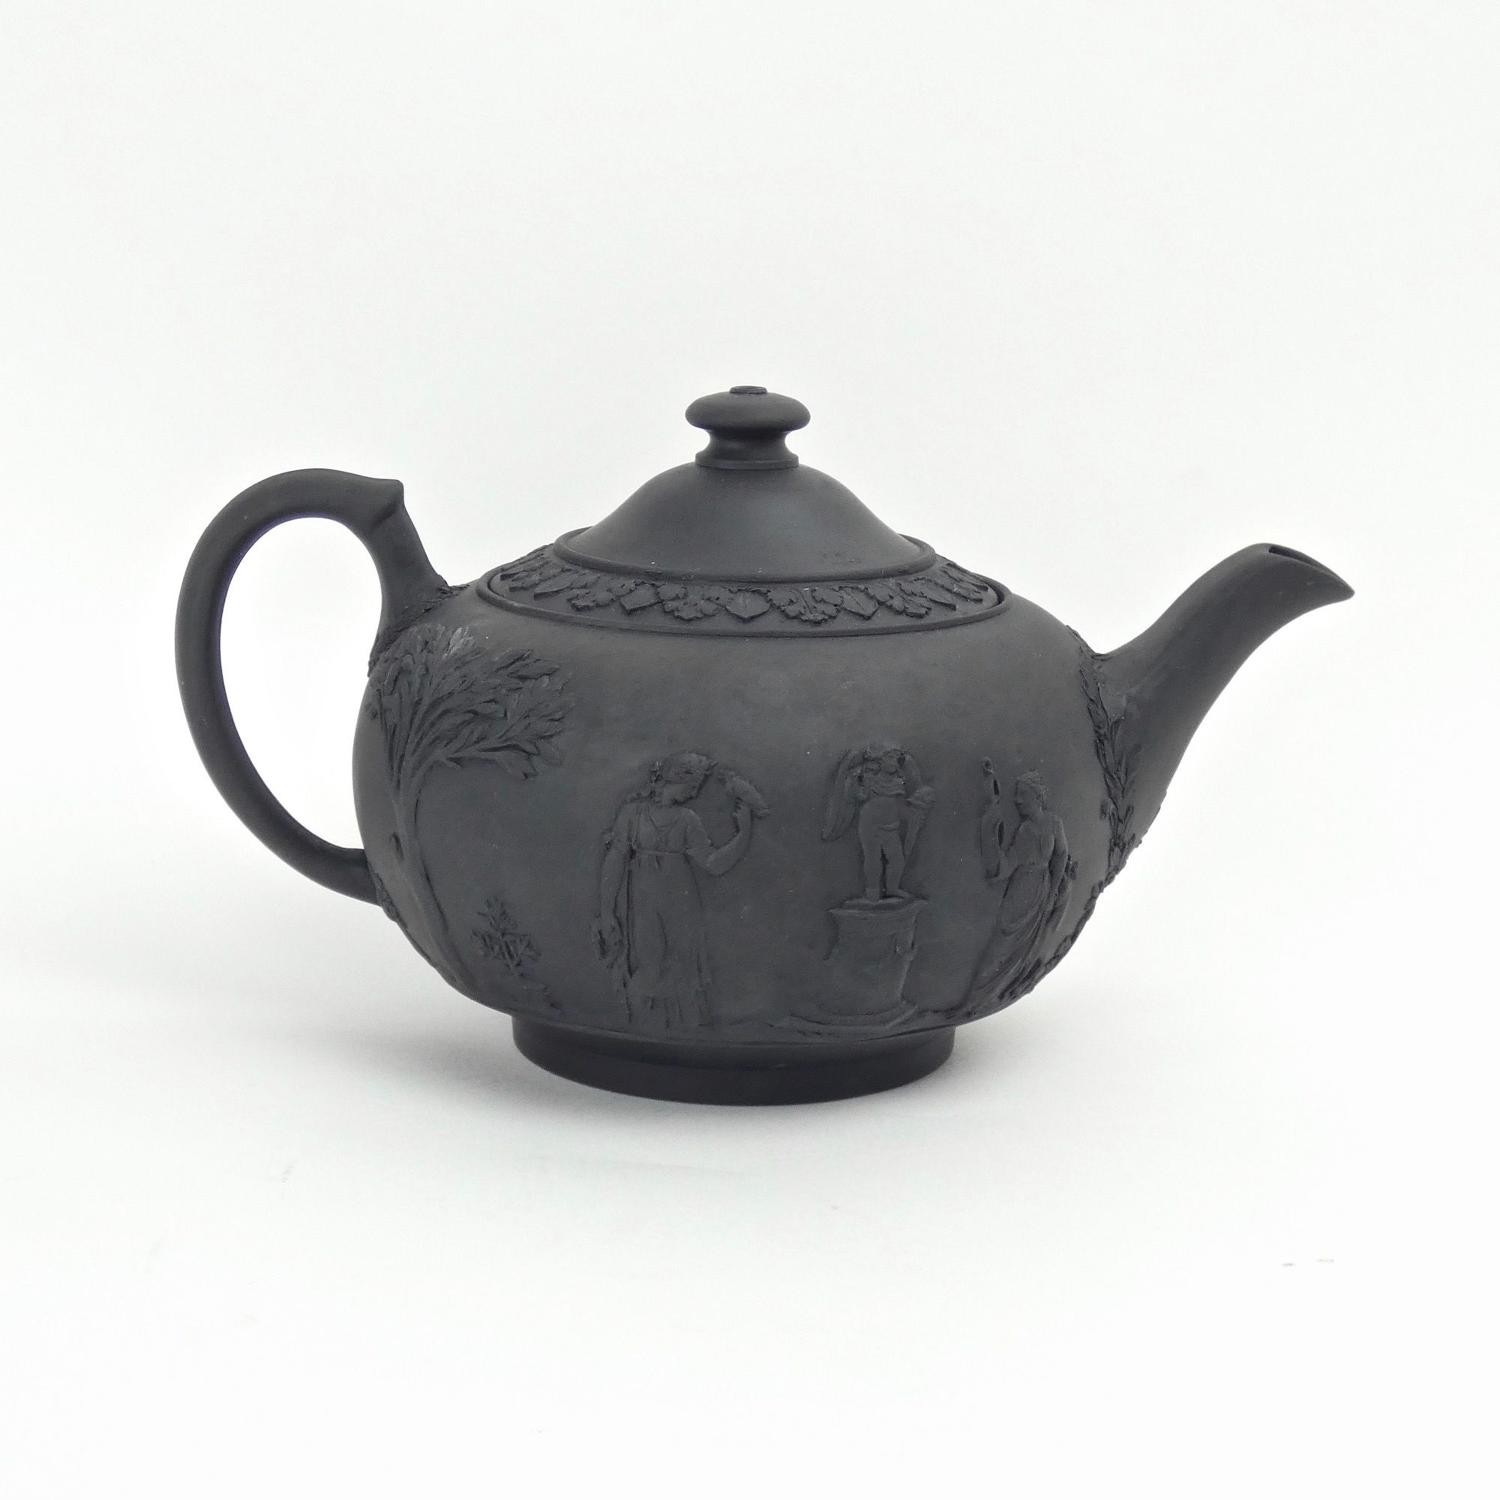 Wedgwood basalt teapot